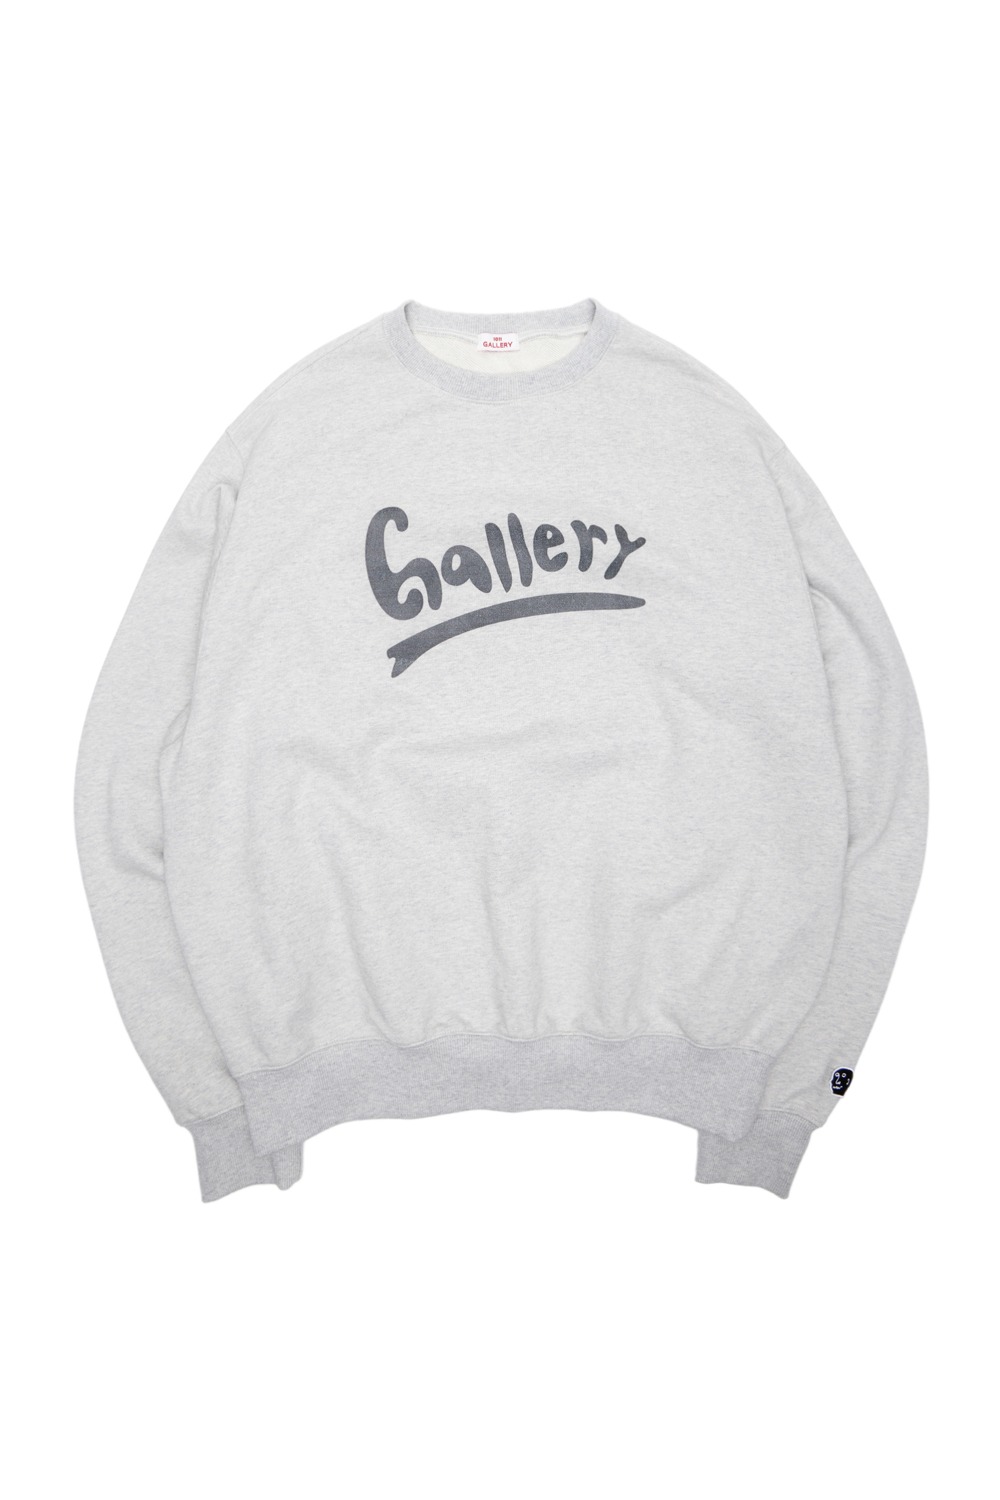 Gallery Wave Logo Graphic Sweat Shirt - Light Grey